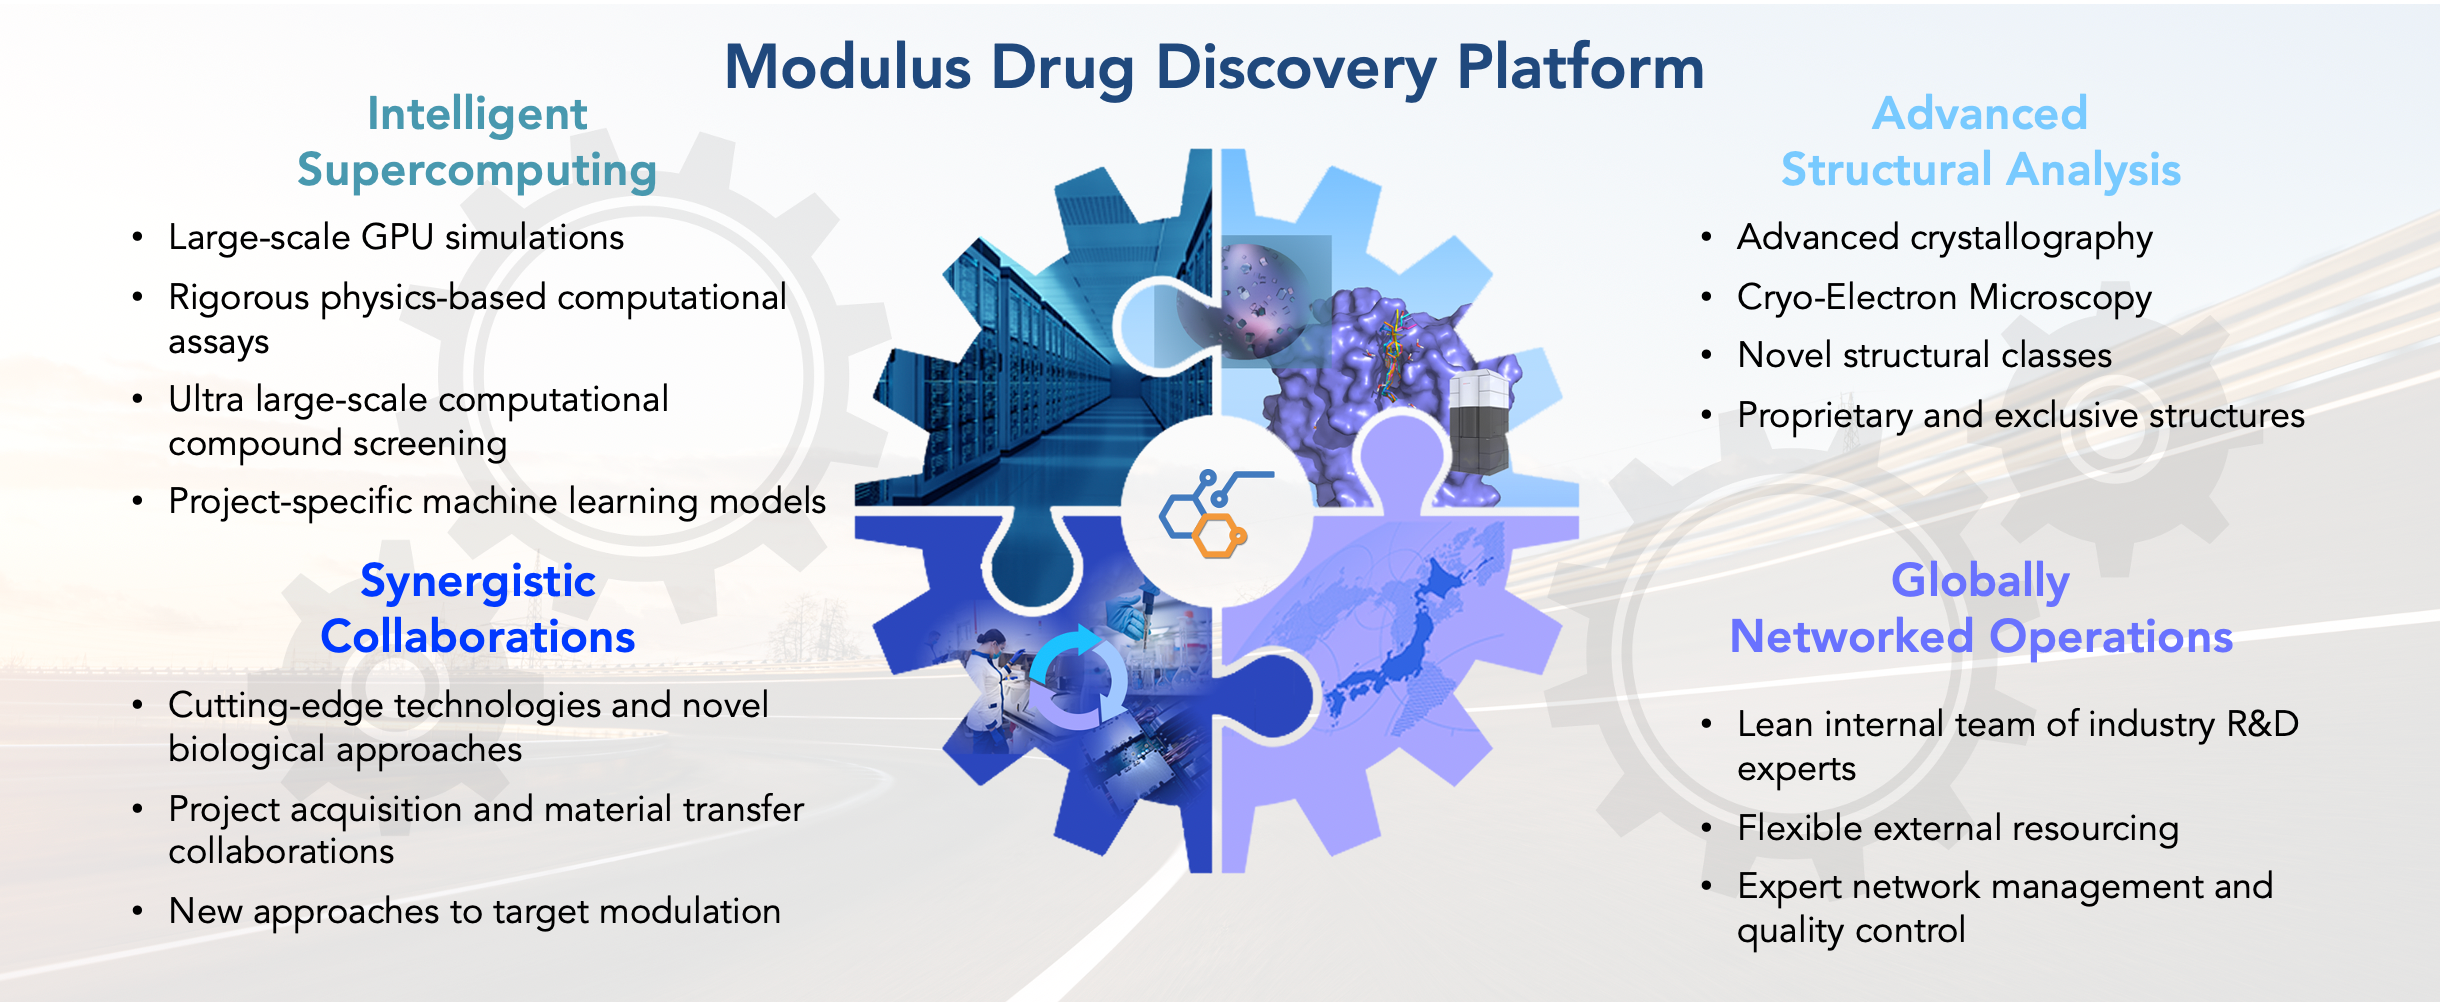 Sample discovery platform